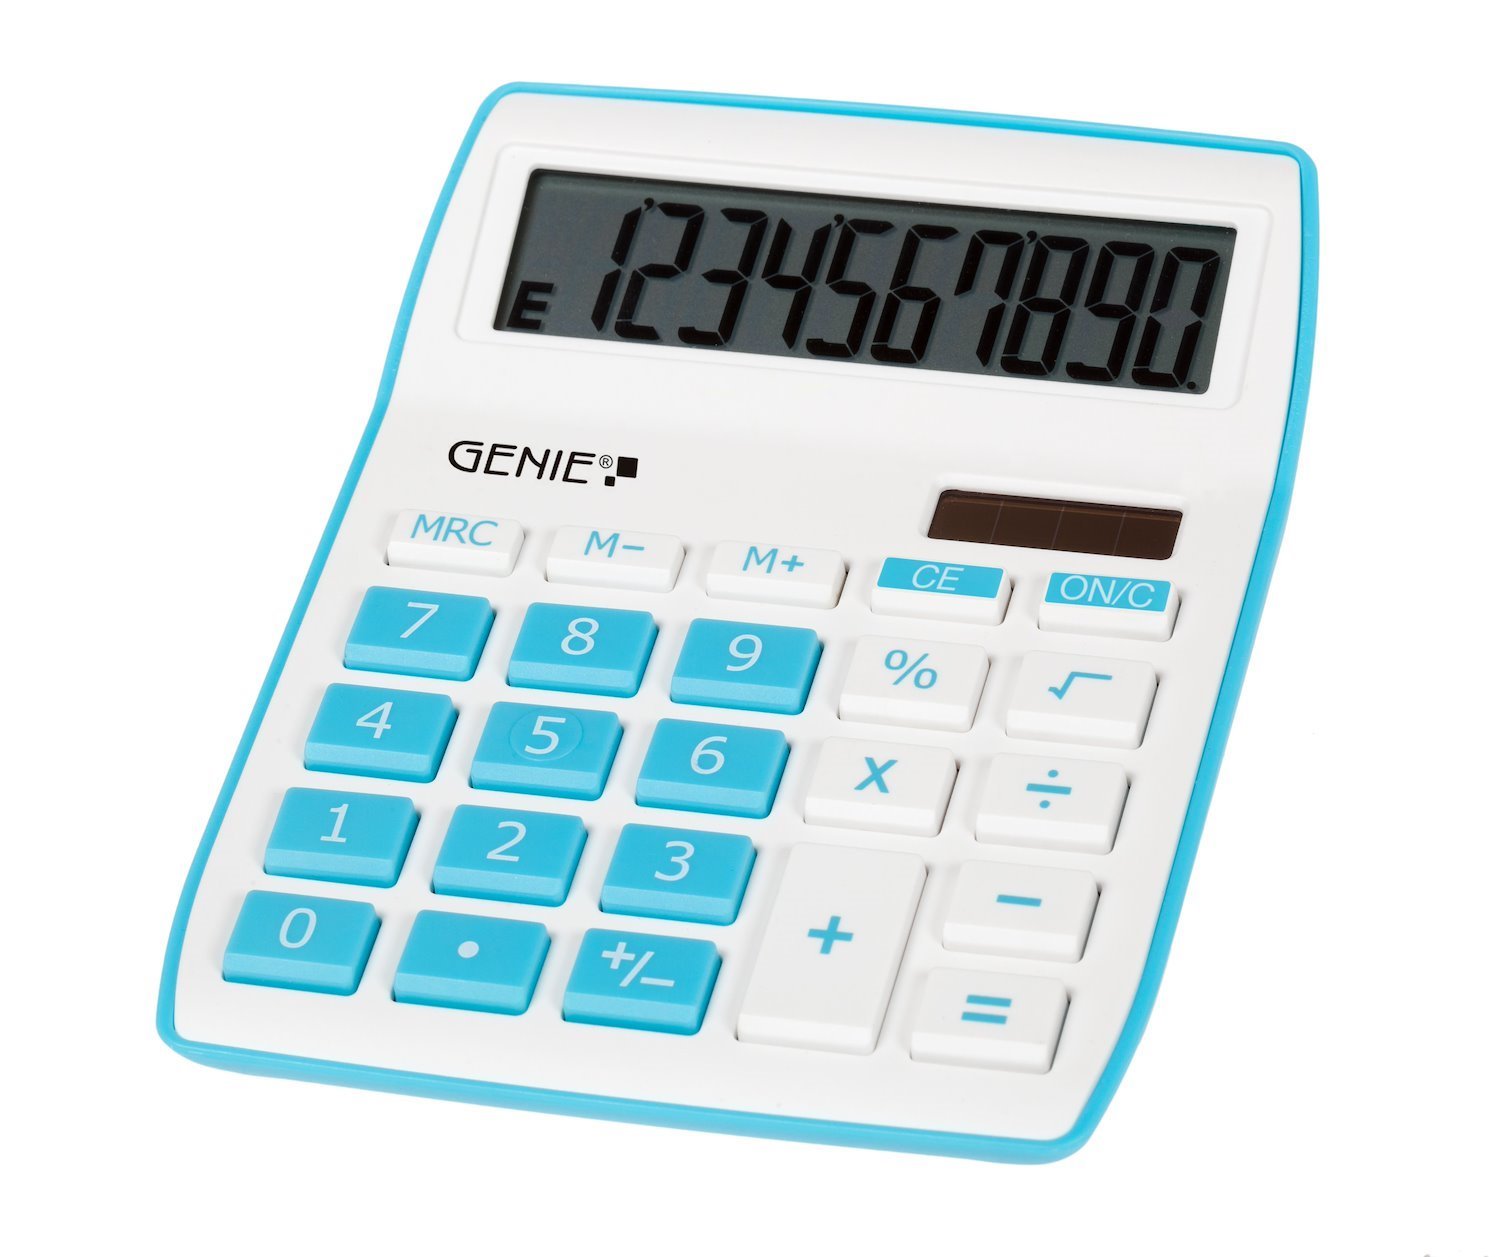 Genius Genie 840 B Calculator Desktop Display Blue White (Genie 840B 10 Digit Desktop Calculator Blue - 12260)